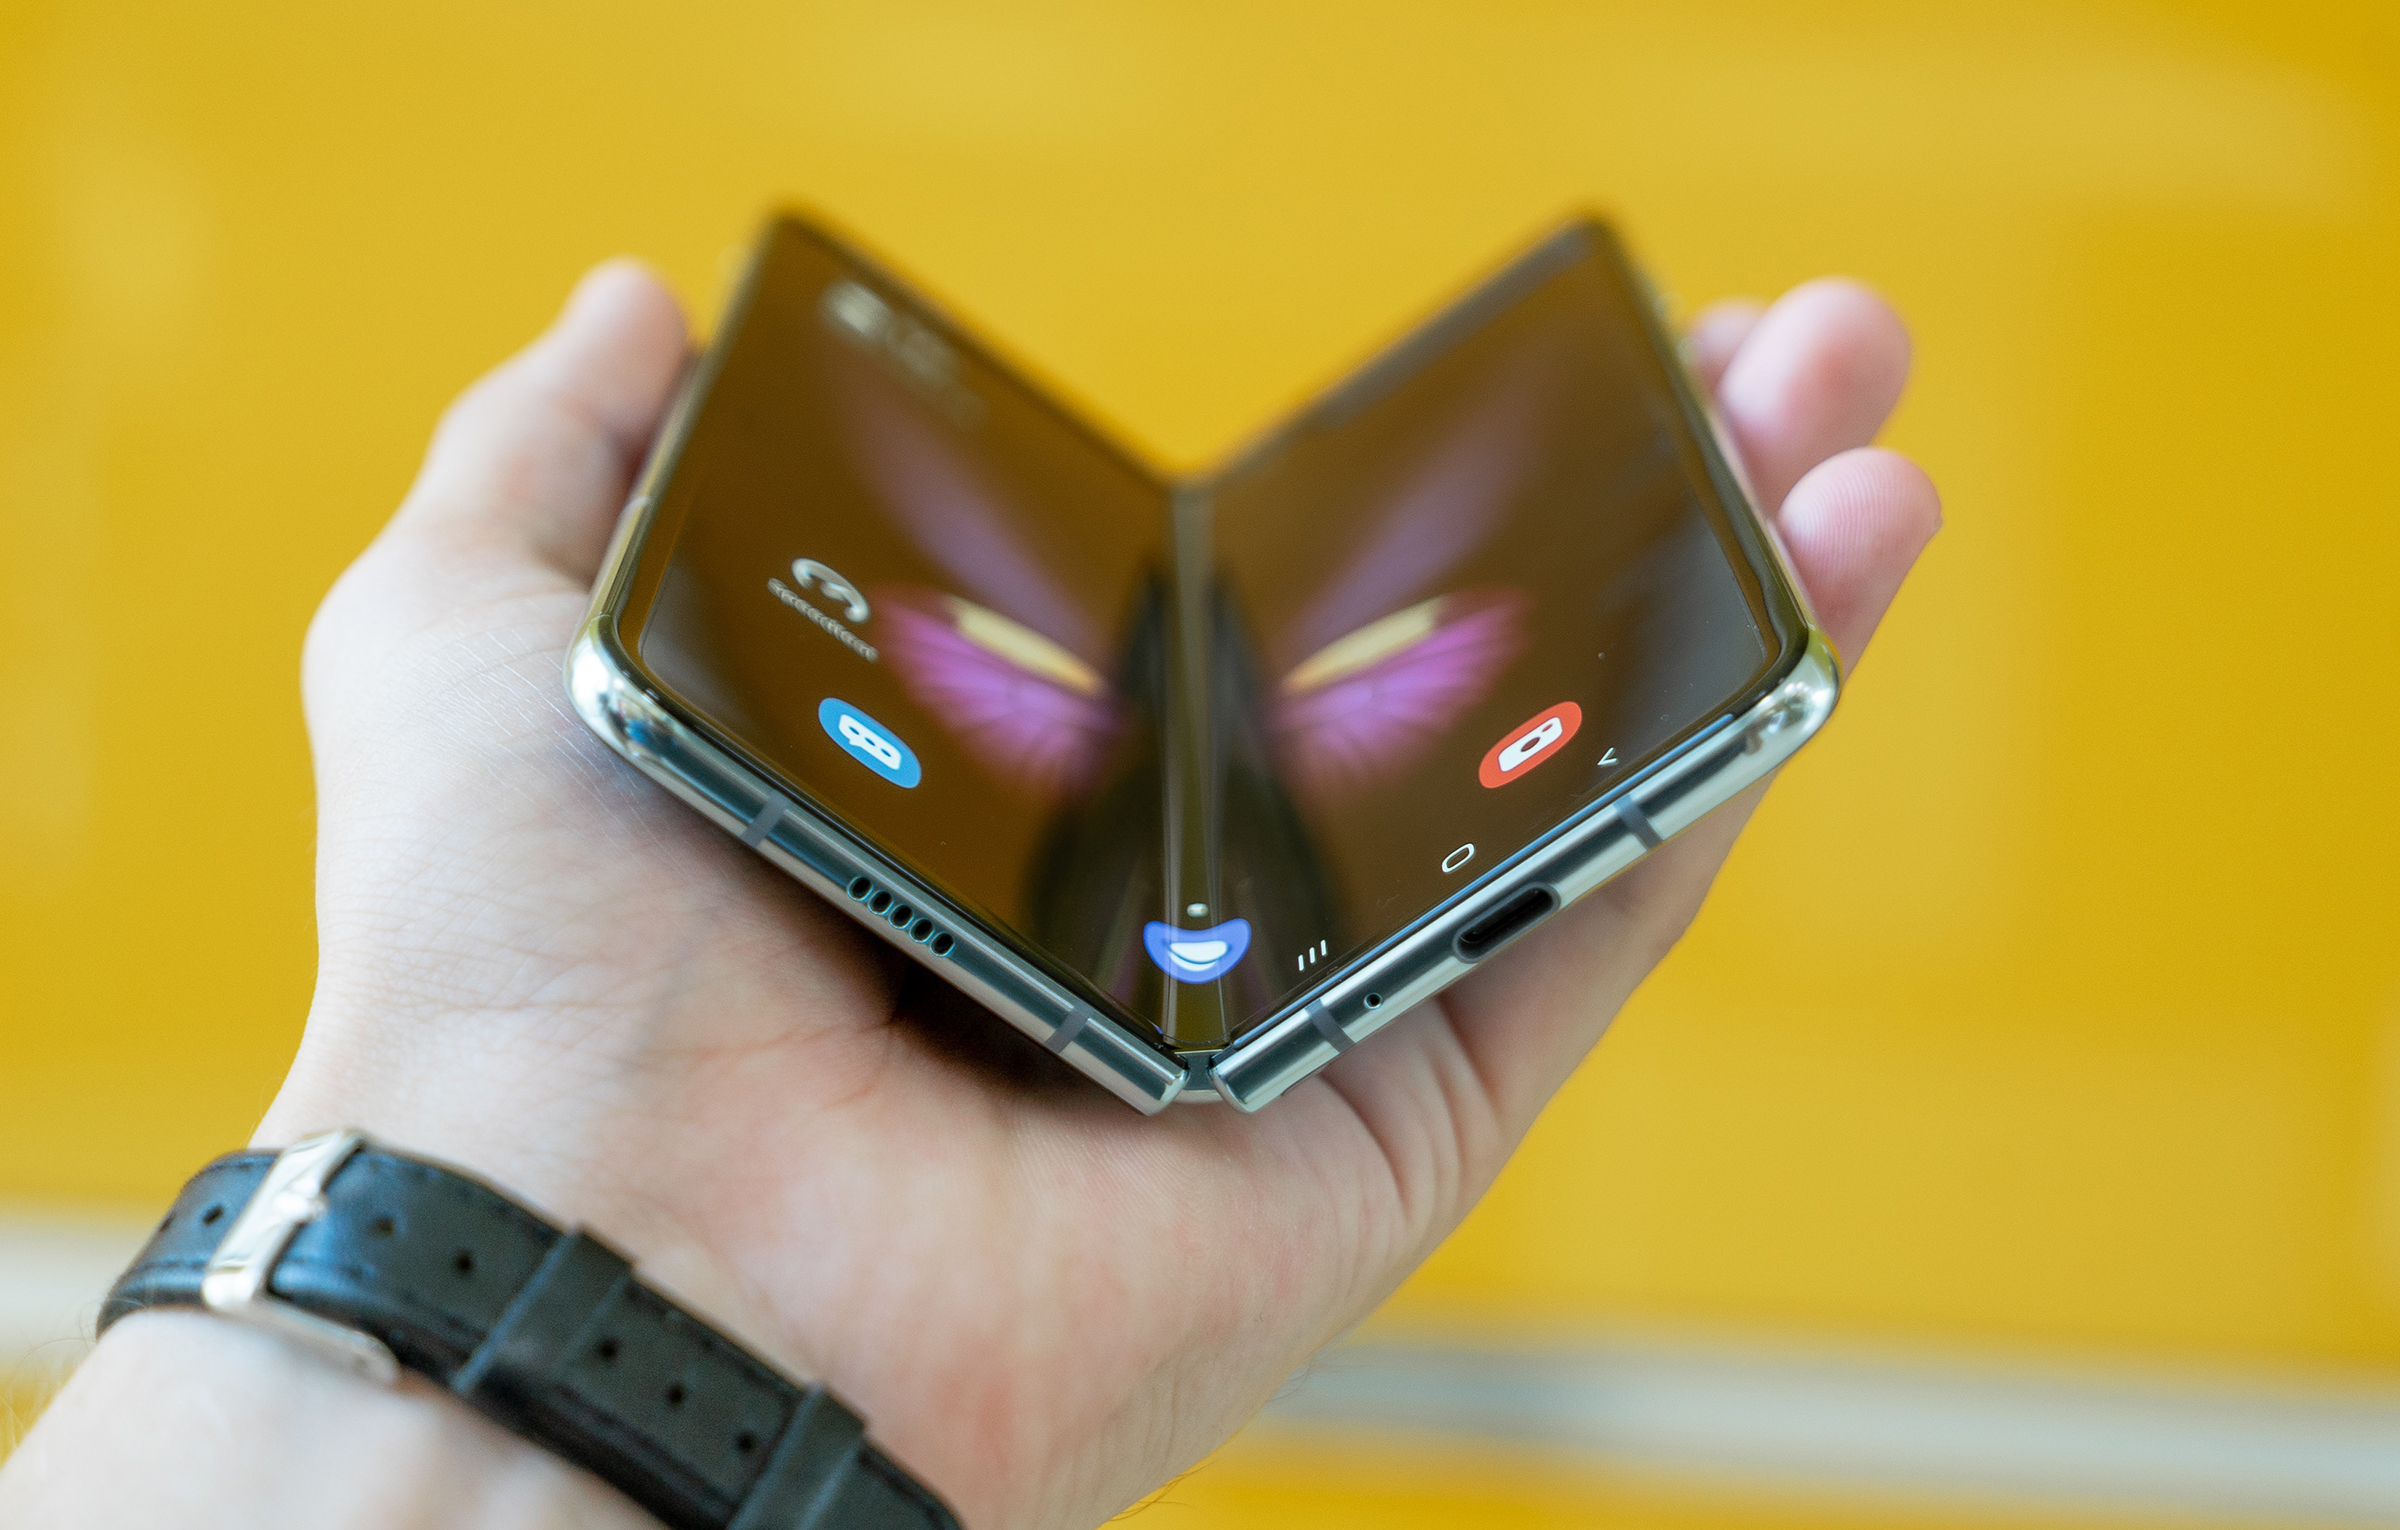 Samsung Galaxy Z Fold 2 4pda